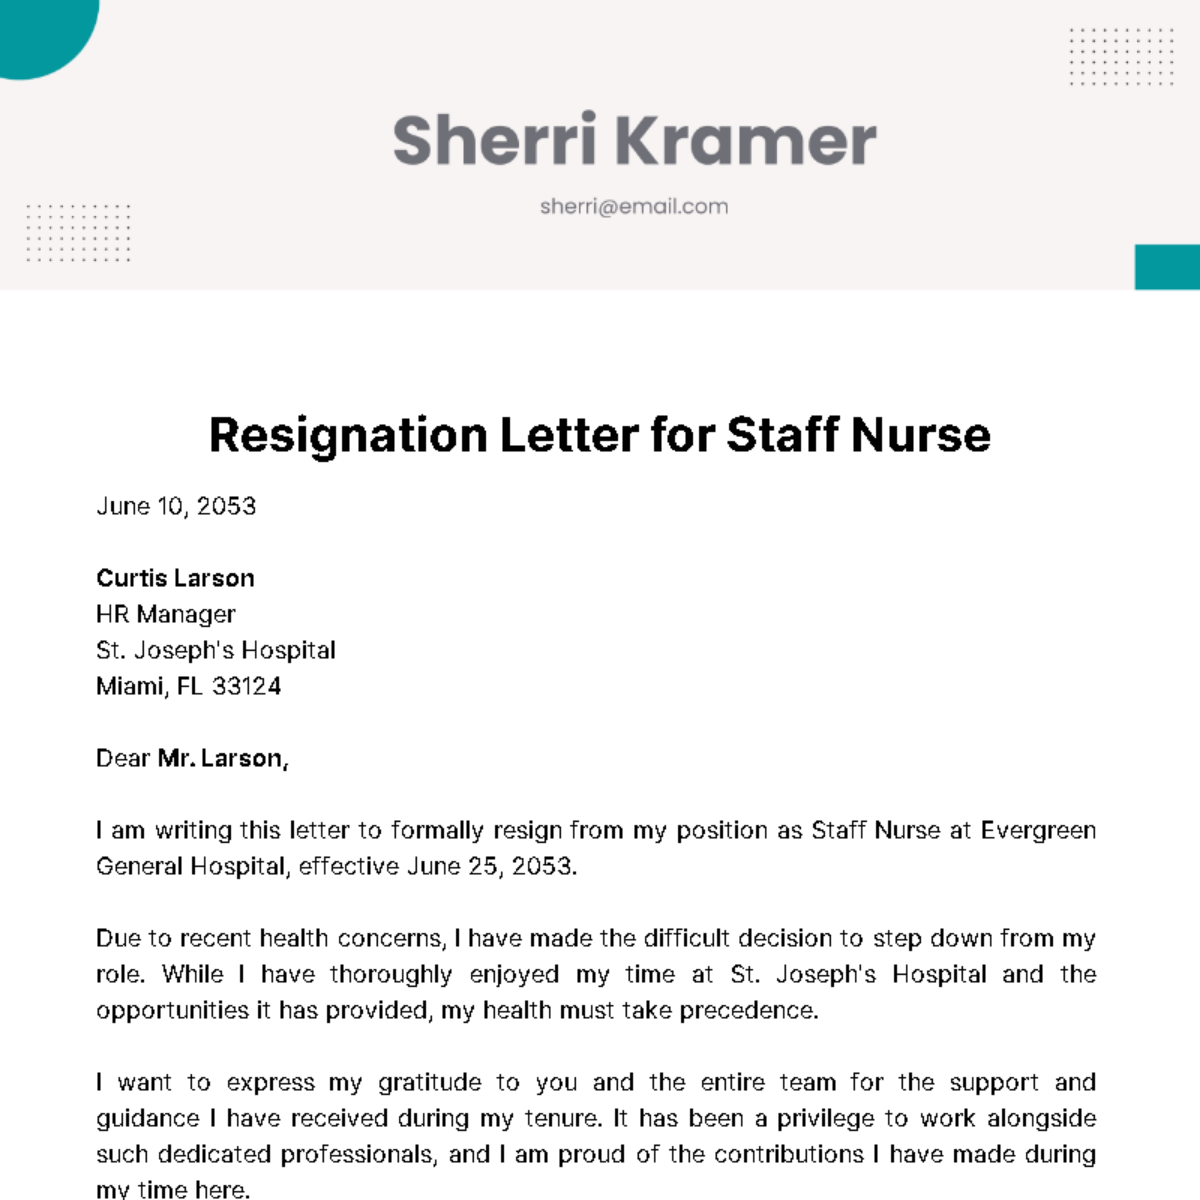 Resignation Letter for Staff Nurse Template